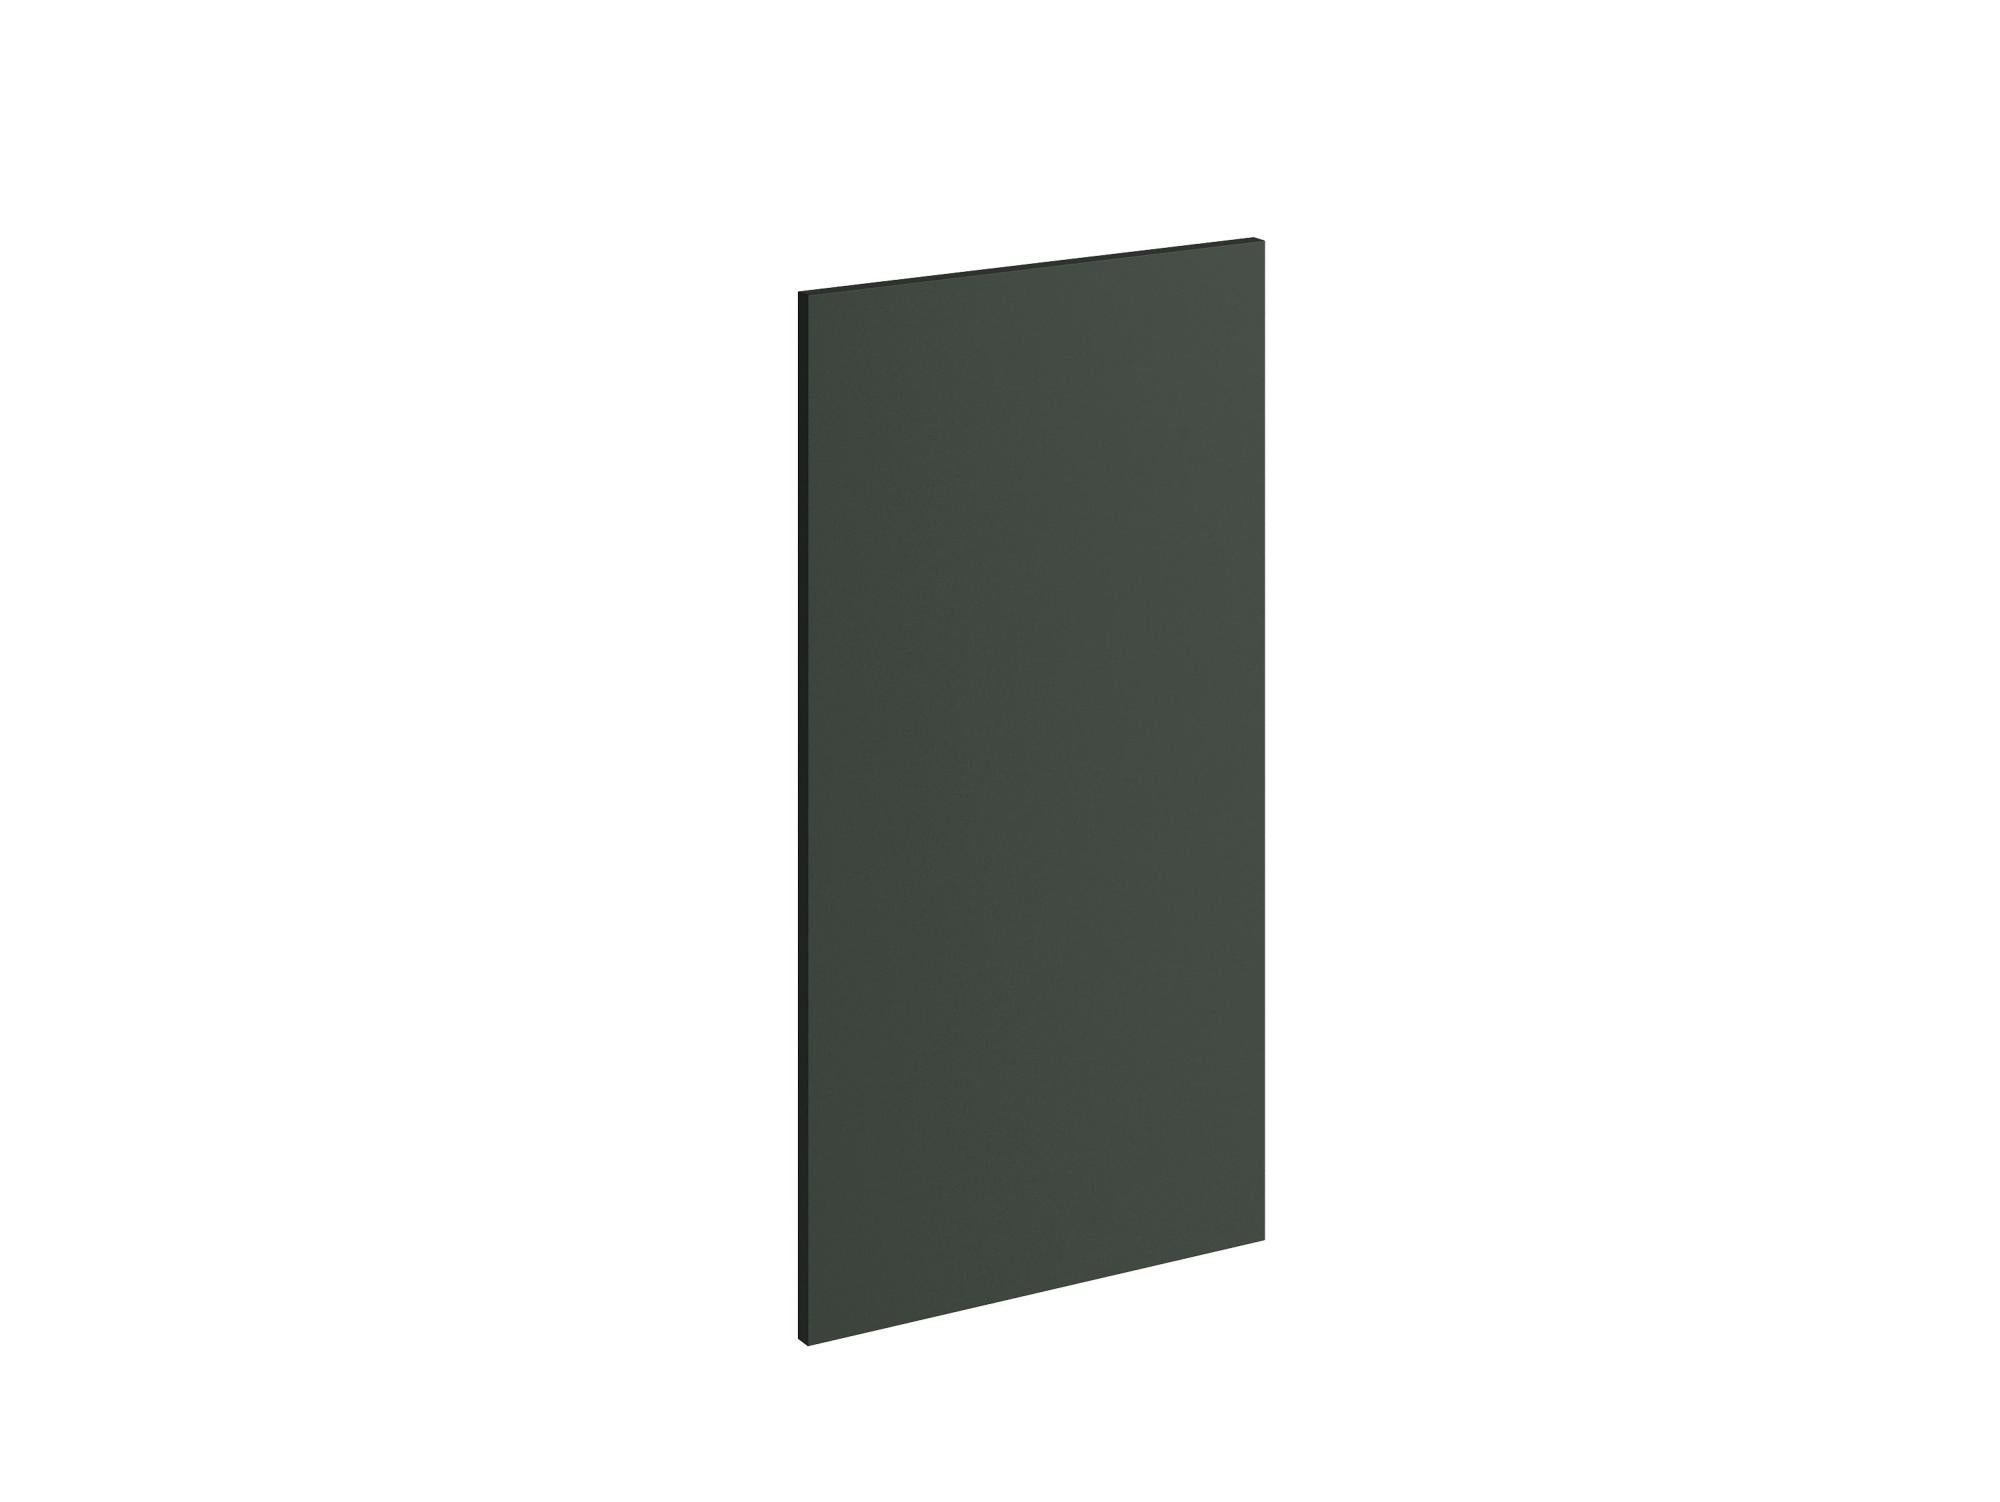 Puerta para mueble de cocina atenas verde mate h 76.8 x l 45 cm